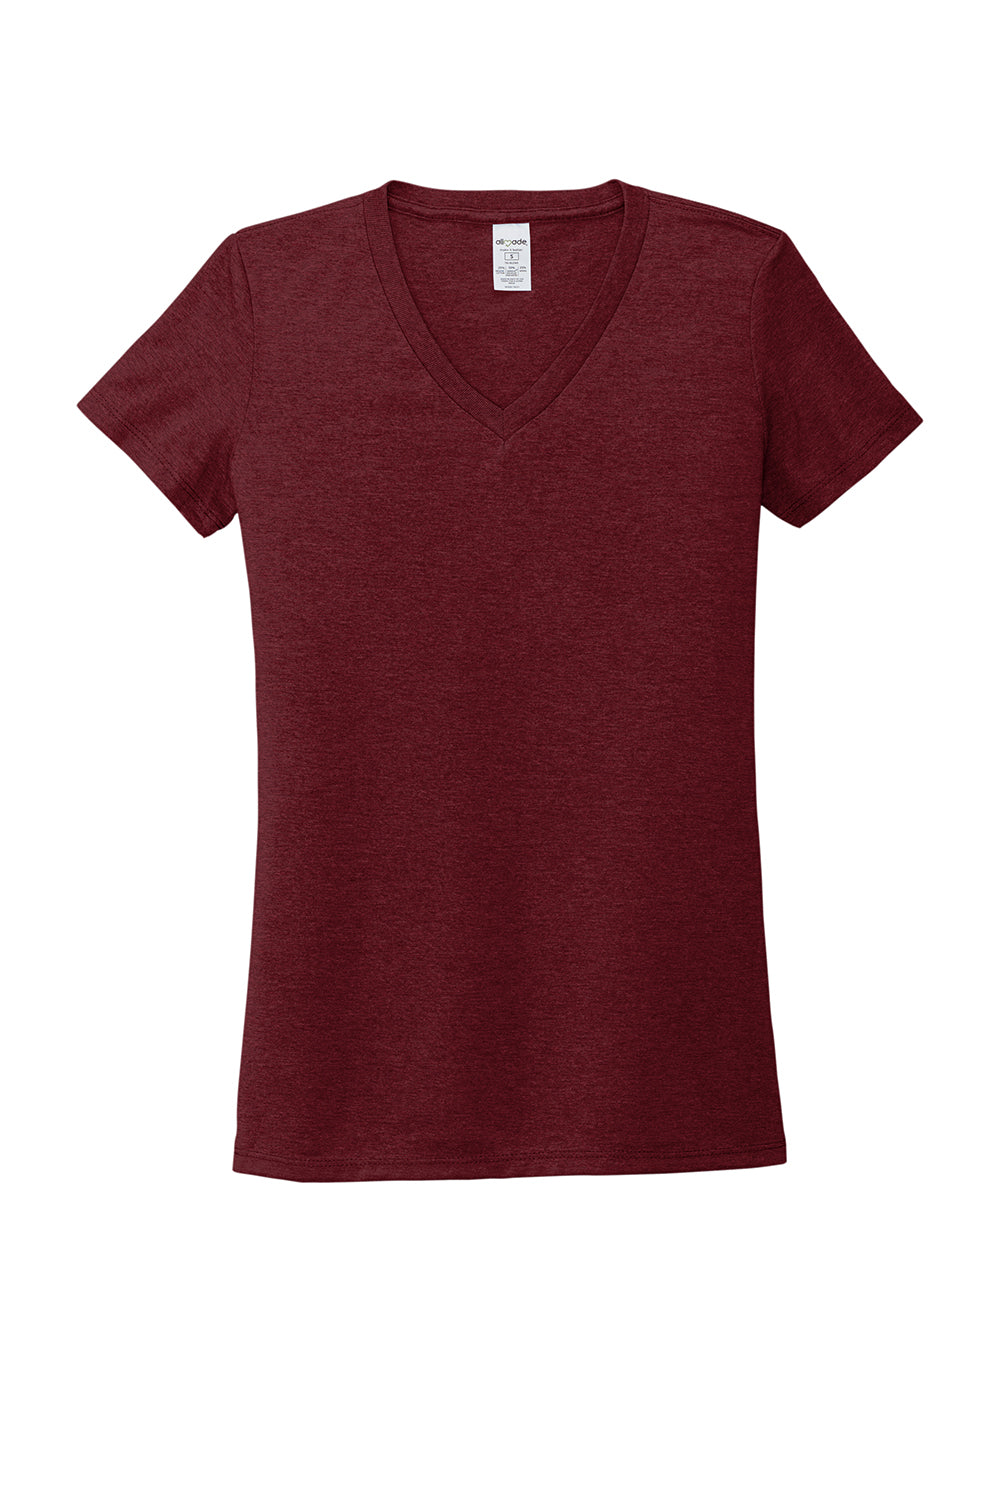 Allmade AL2018 Womens Short Sleeve V-Neck T-Shirt Vino Red Flat Front